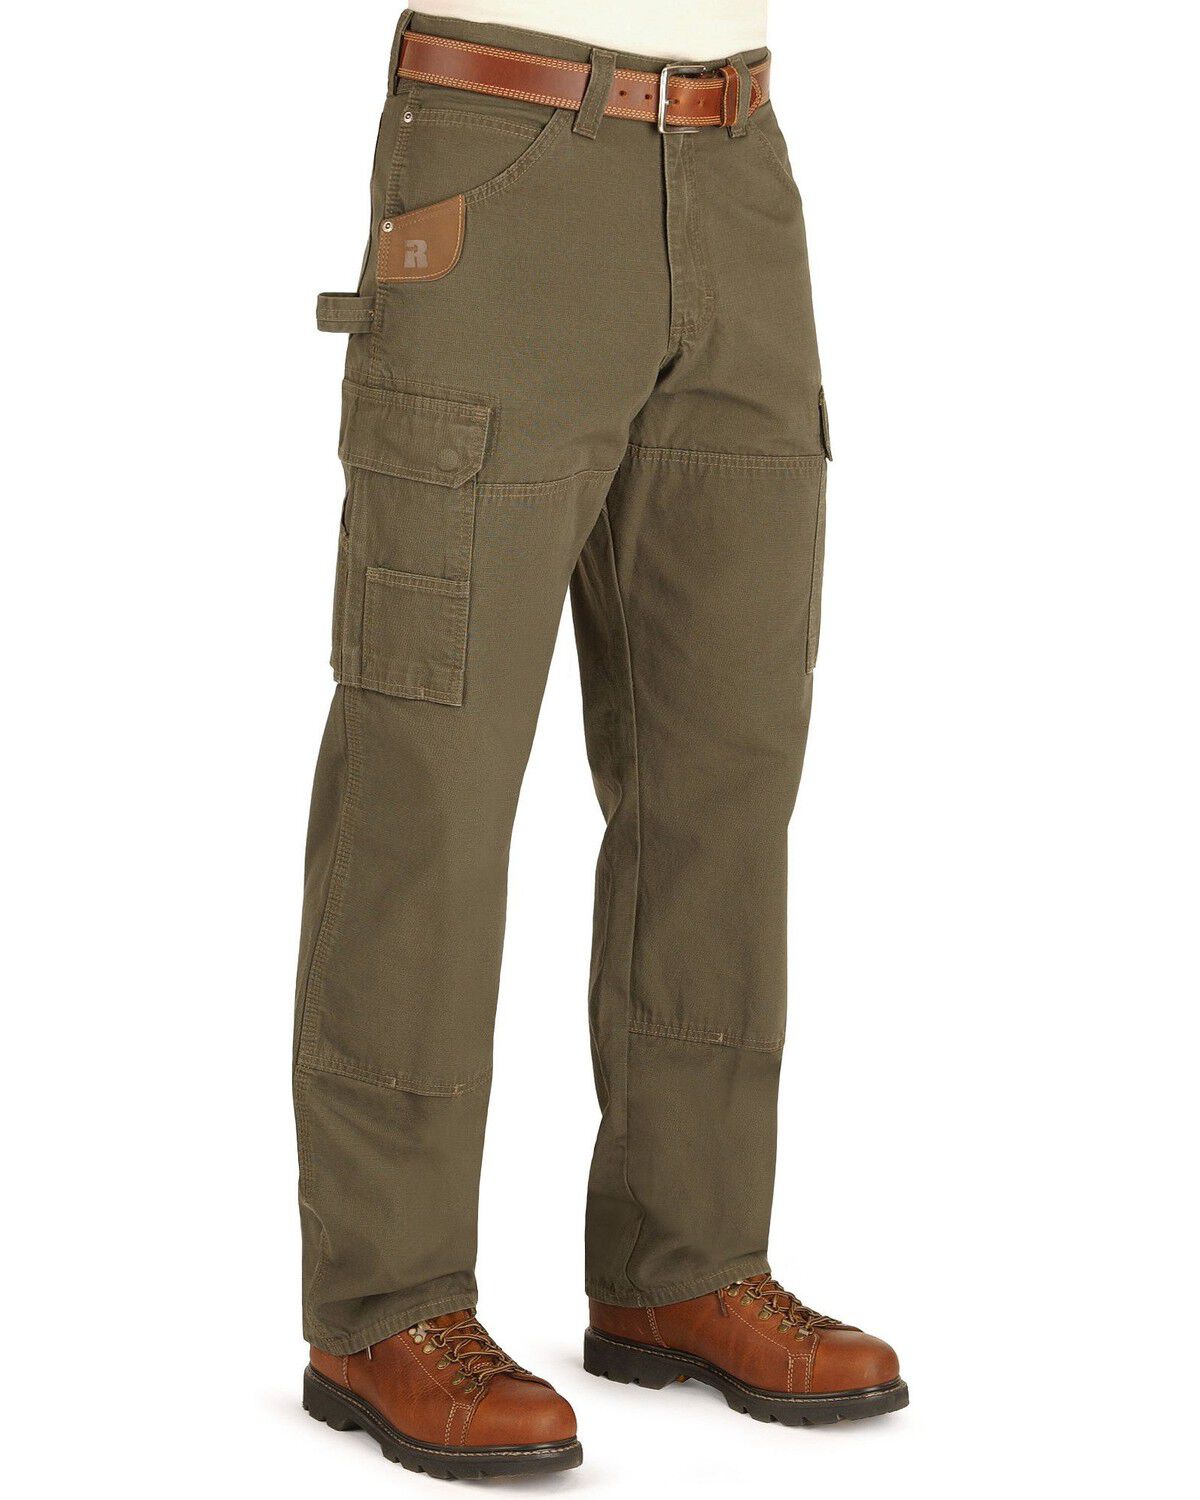 Wrangler Riggs Workwear Ranger Pants 